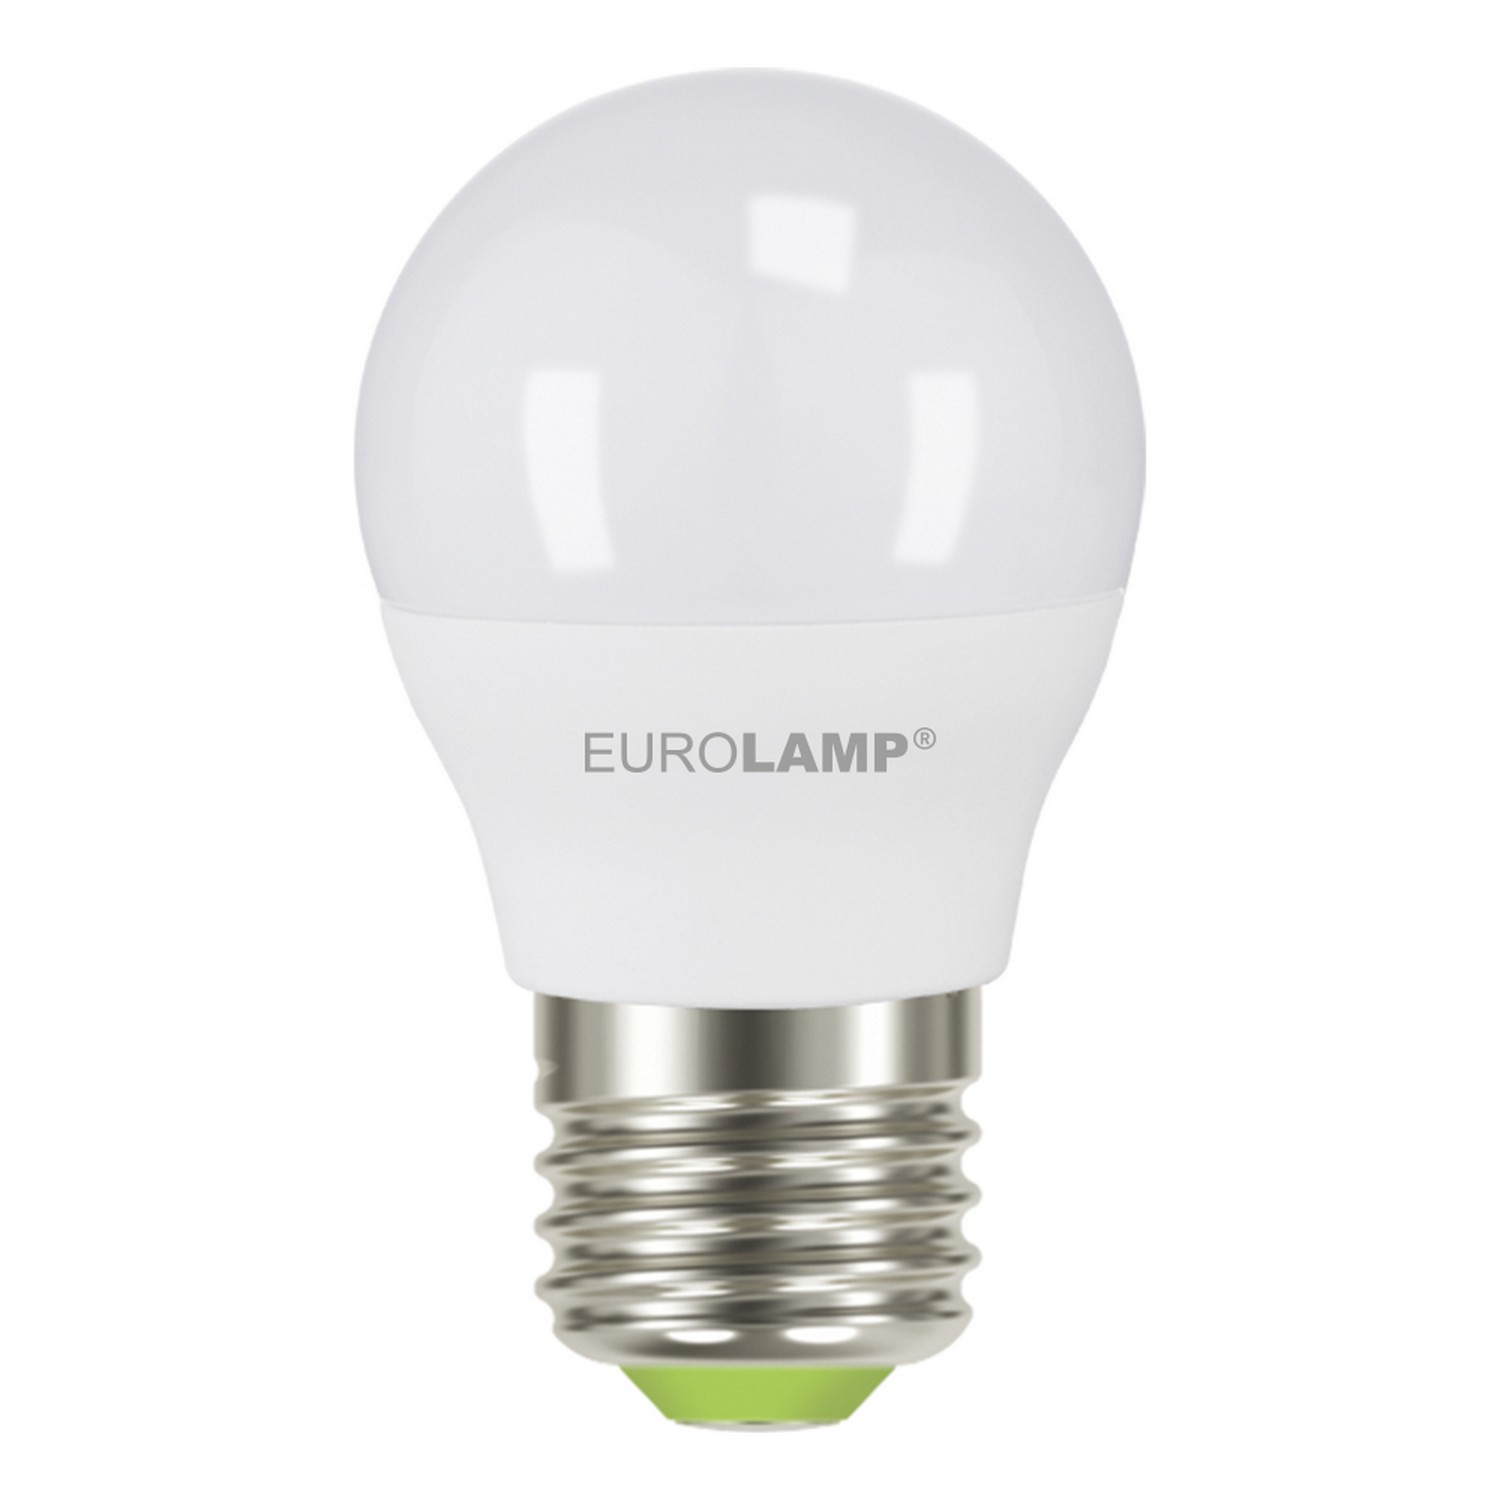 Лампа Eurolamp LED EKO G45 7W E27 4000K акция "1+1" цена 0.00 грн - фотография 2